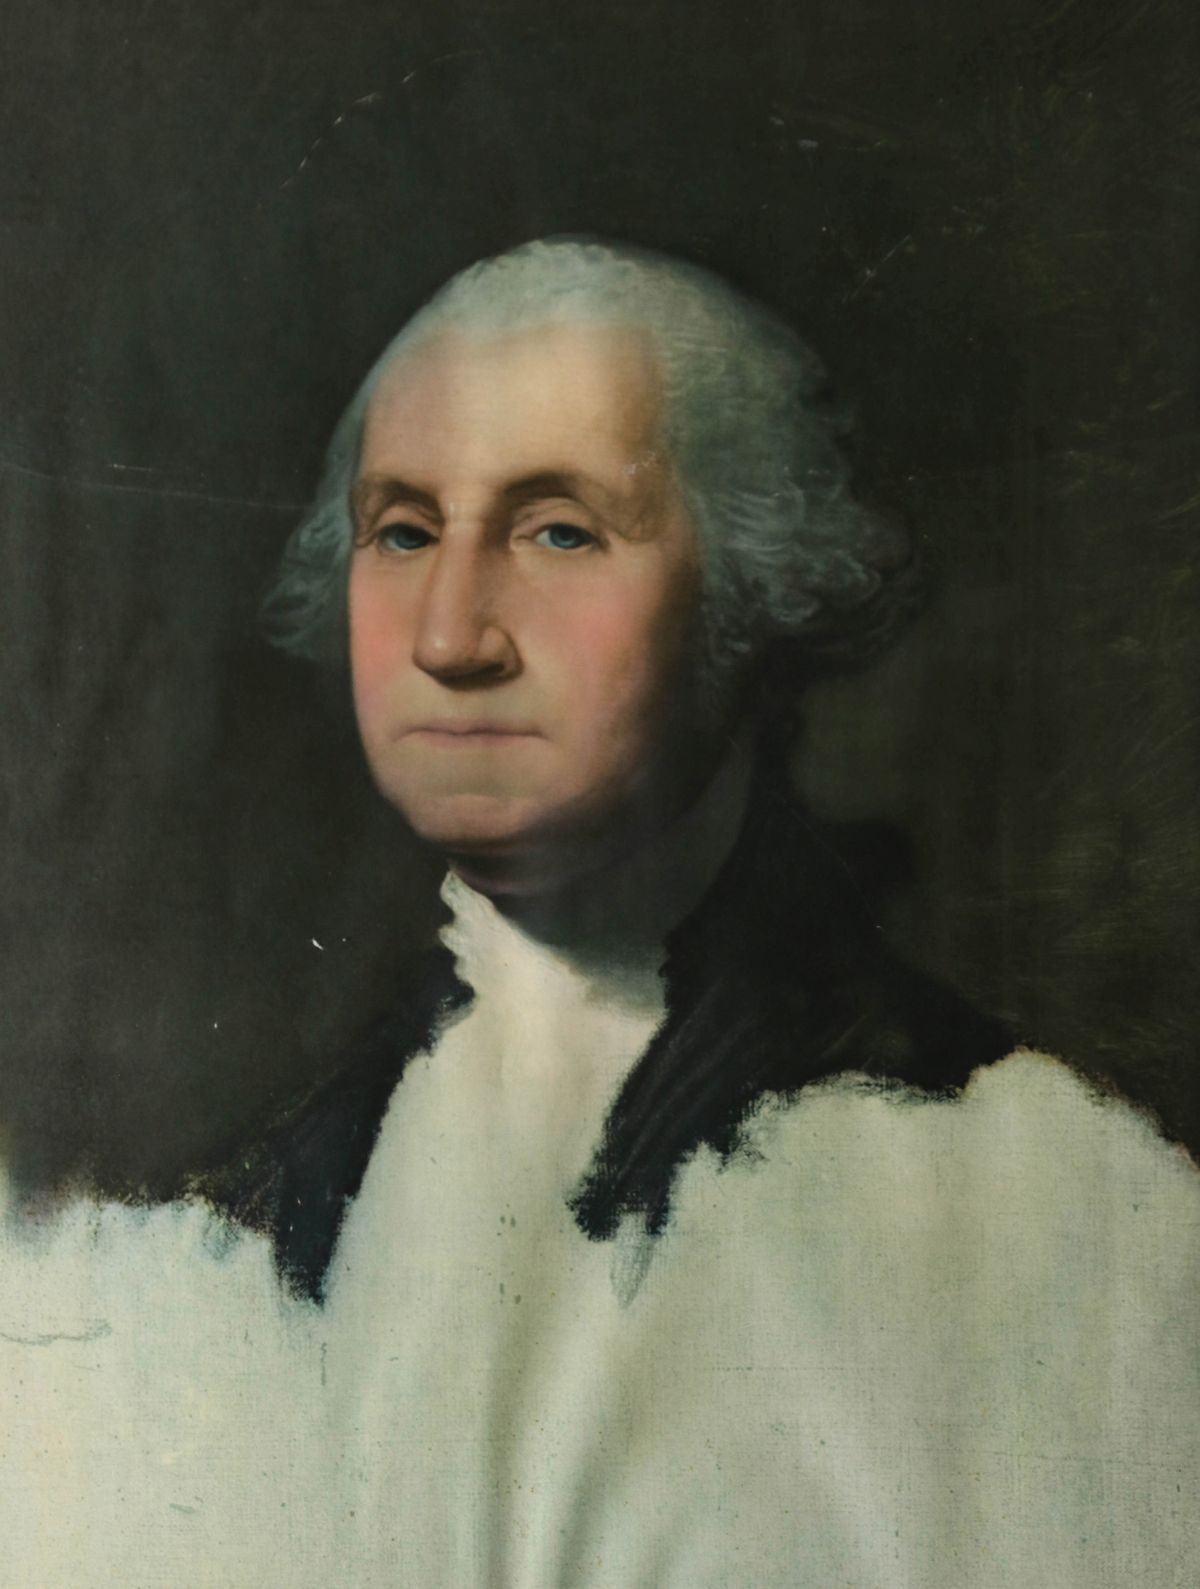 PRINT OF PEALE'S PORTRAIT OF WASHINGTON